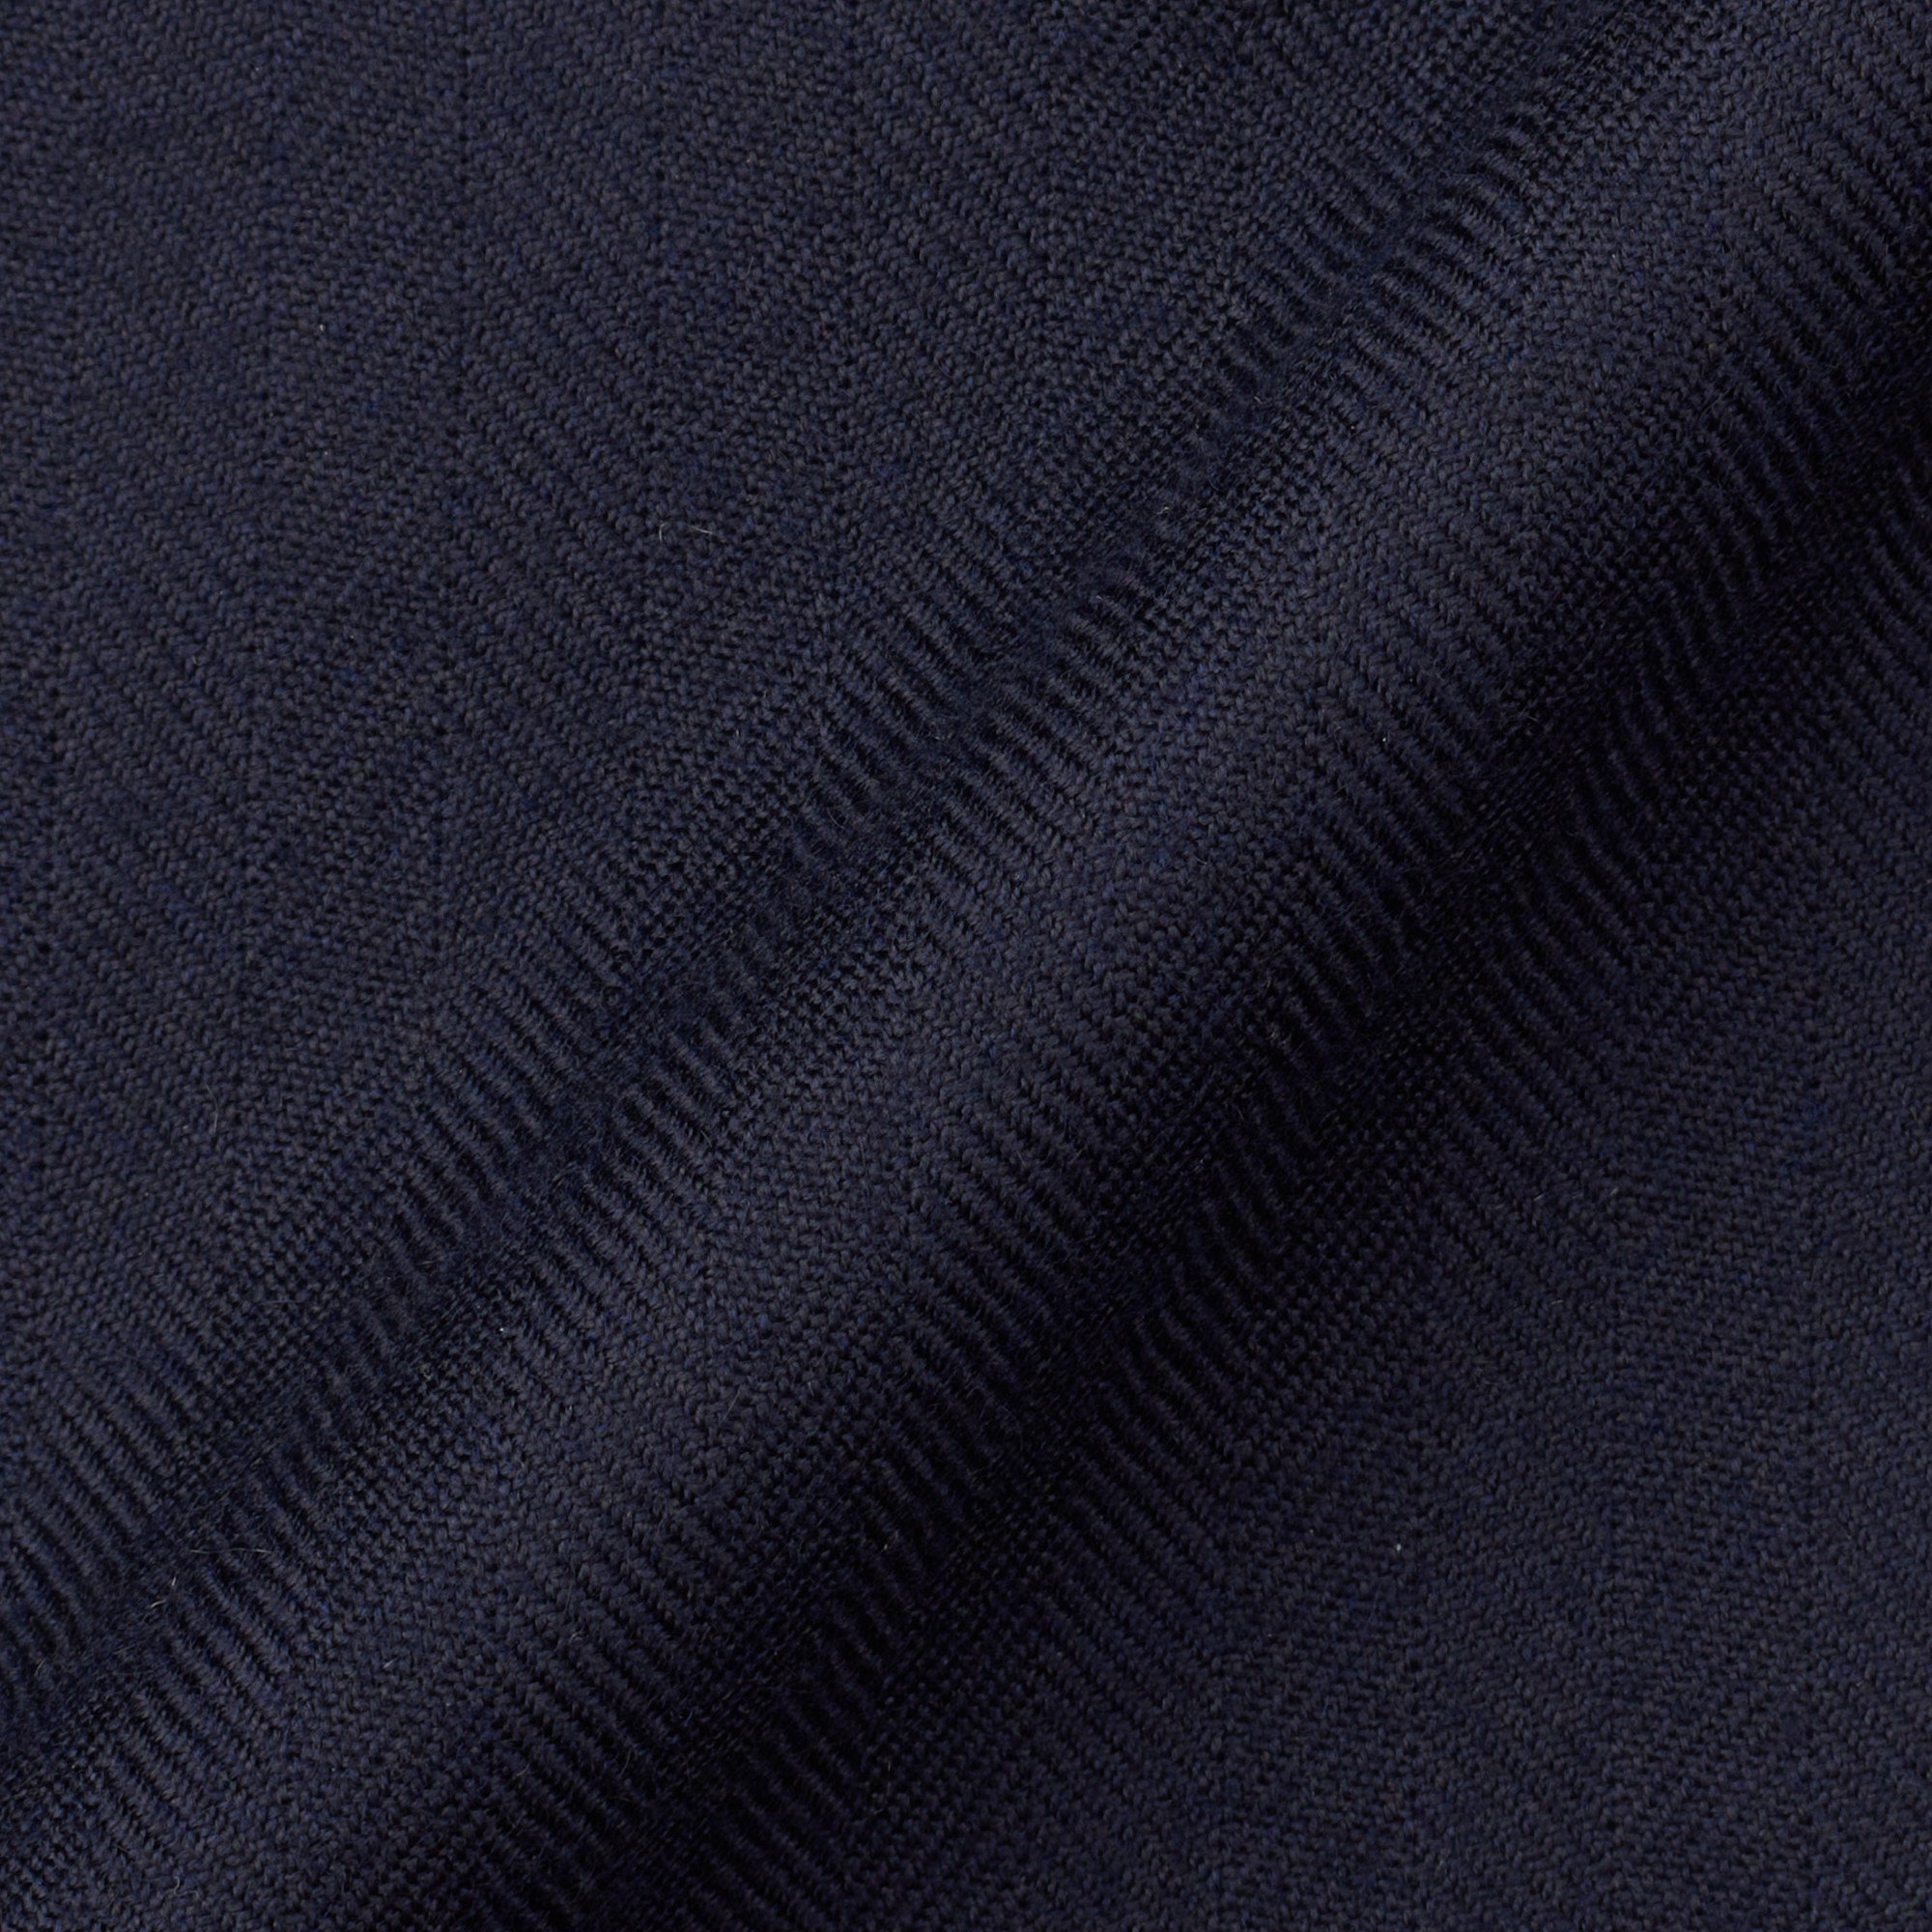 RUBINACCI LH Handmade Bespoke Navy Blue Herringbone Cashmere DB Jacket 50 US 40 RUBINACCI